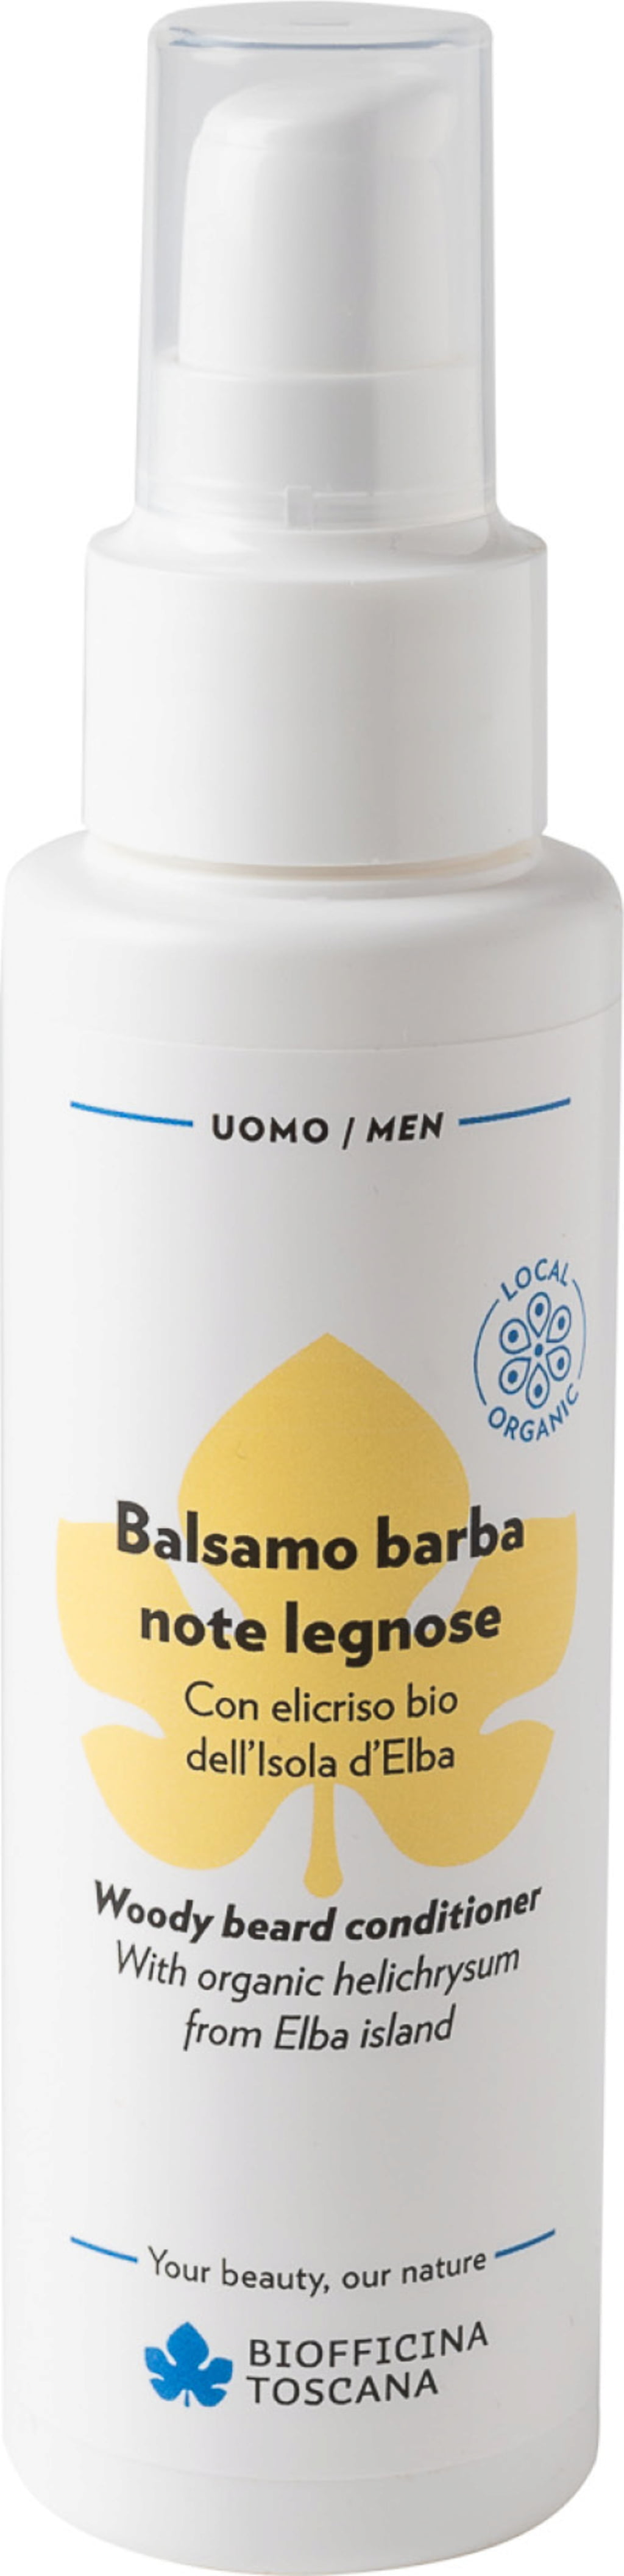 Biofficina Toscana uomo Beard Balm - Woody scent